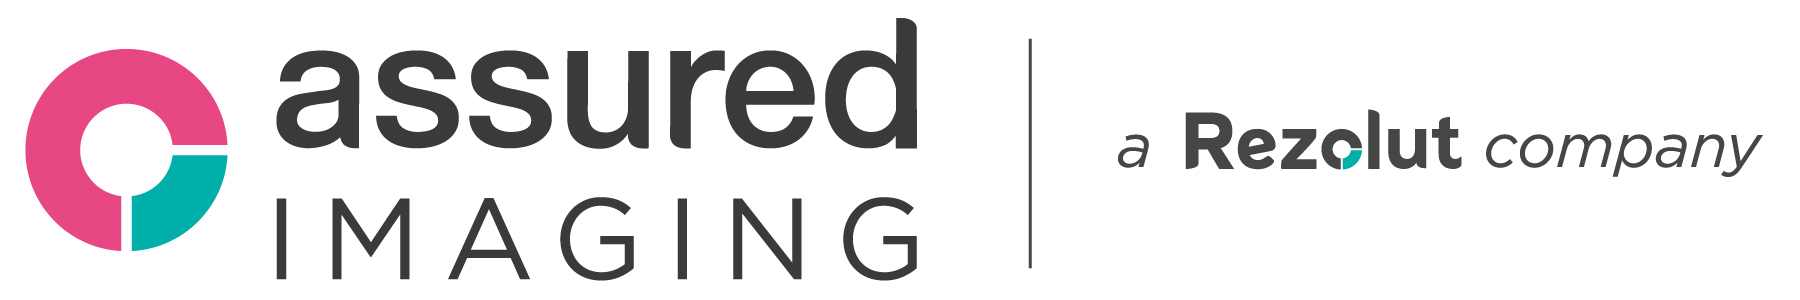 Assured Imaging logo